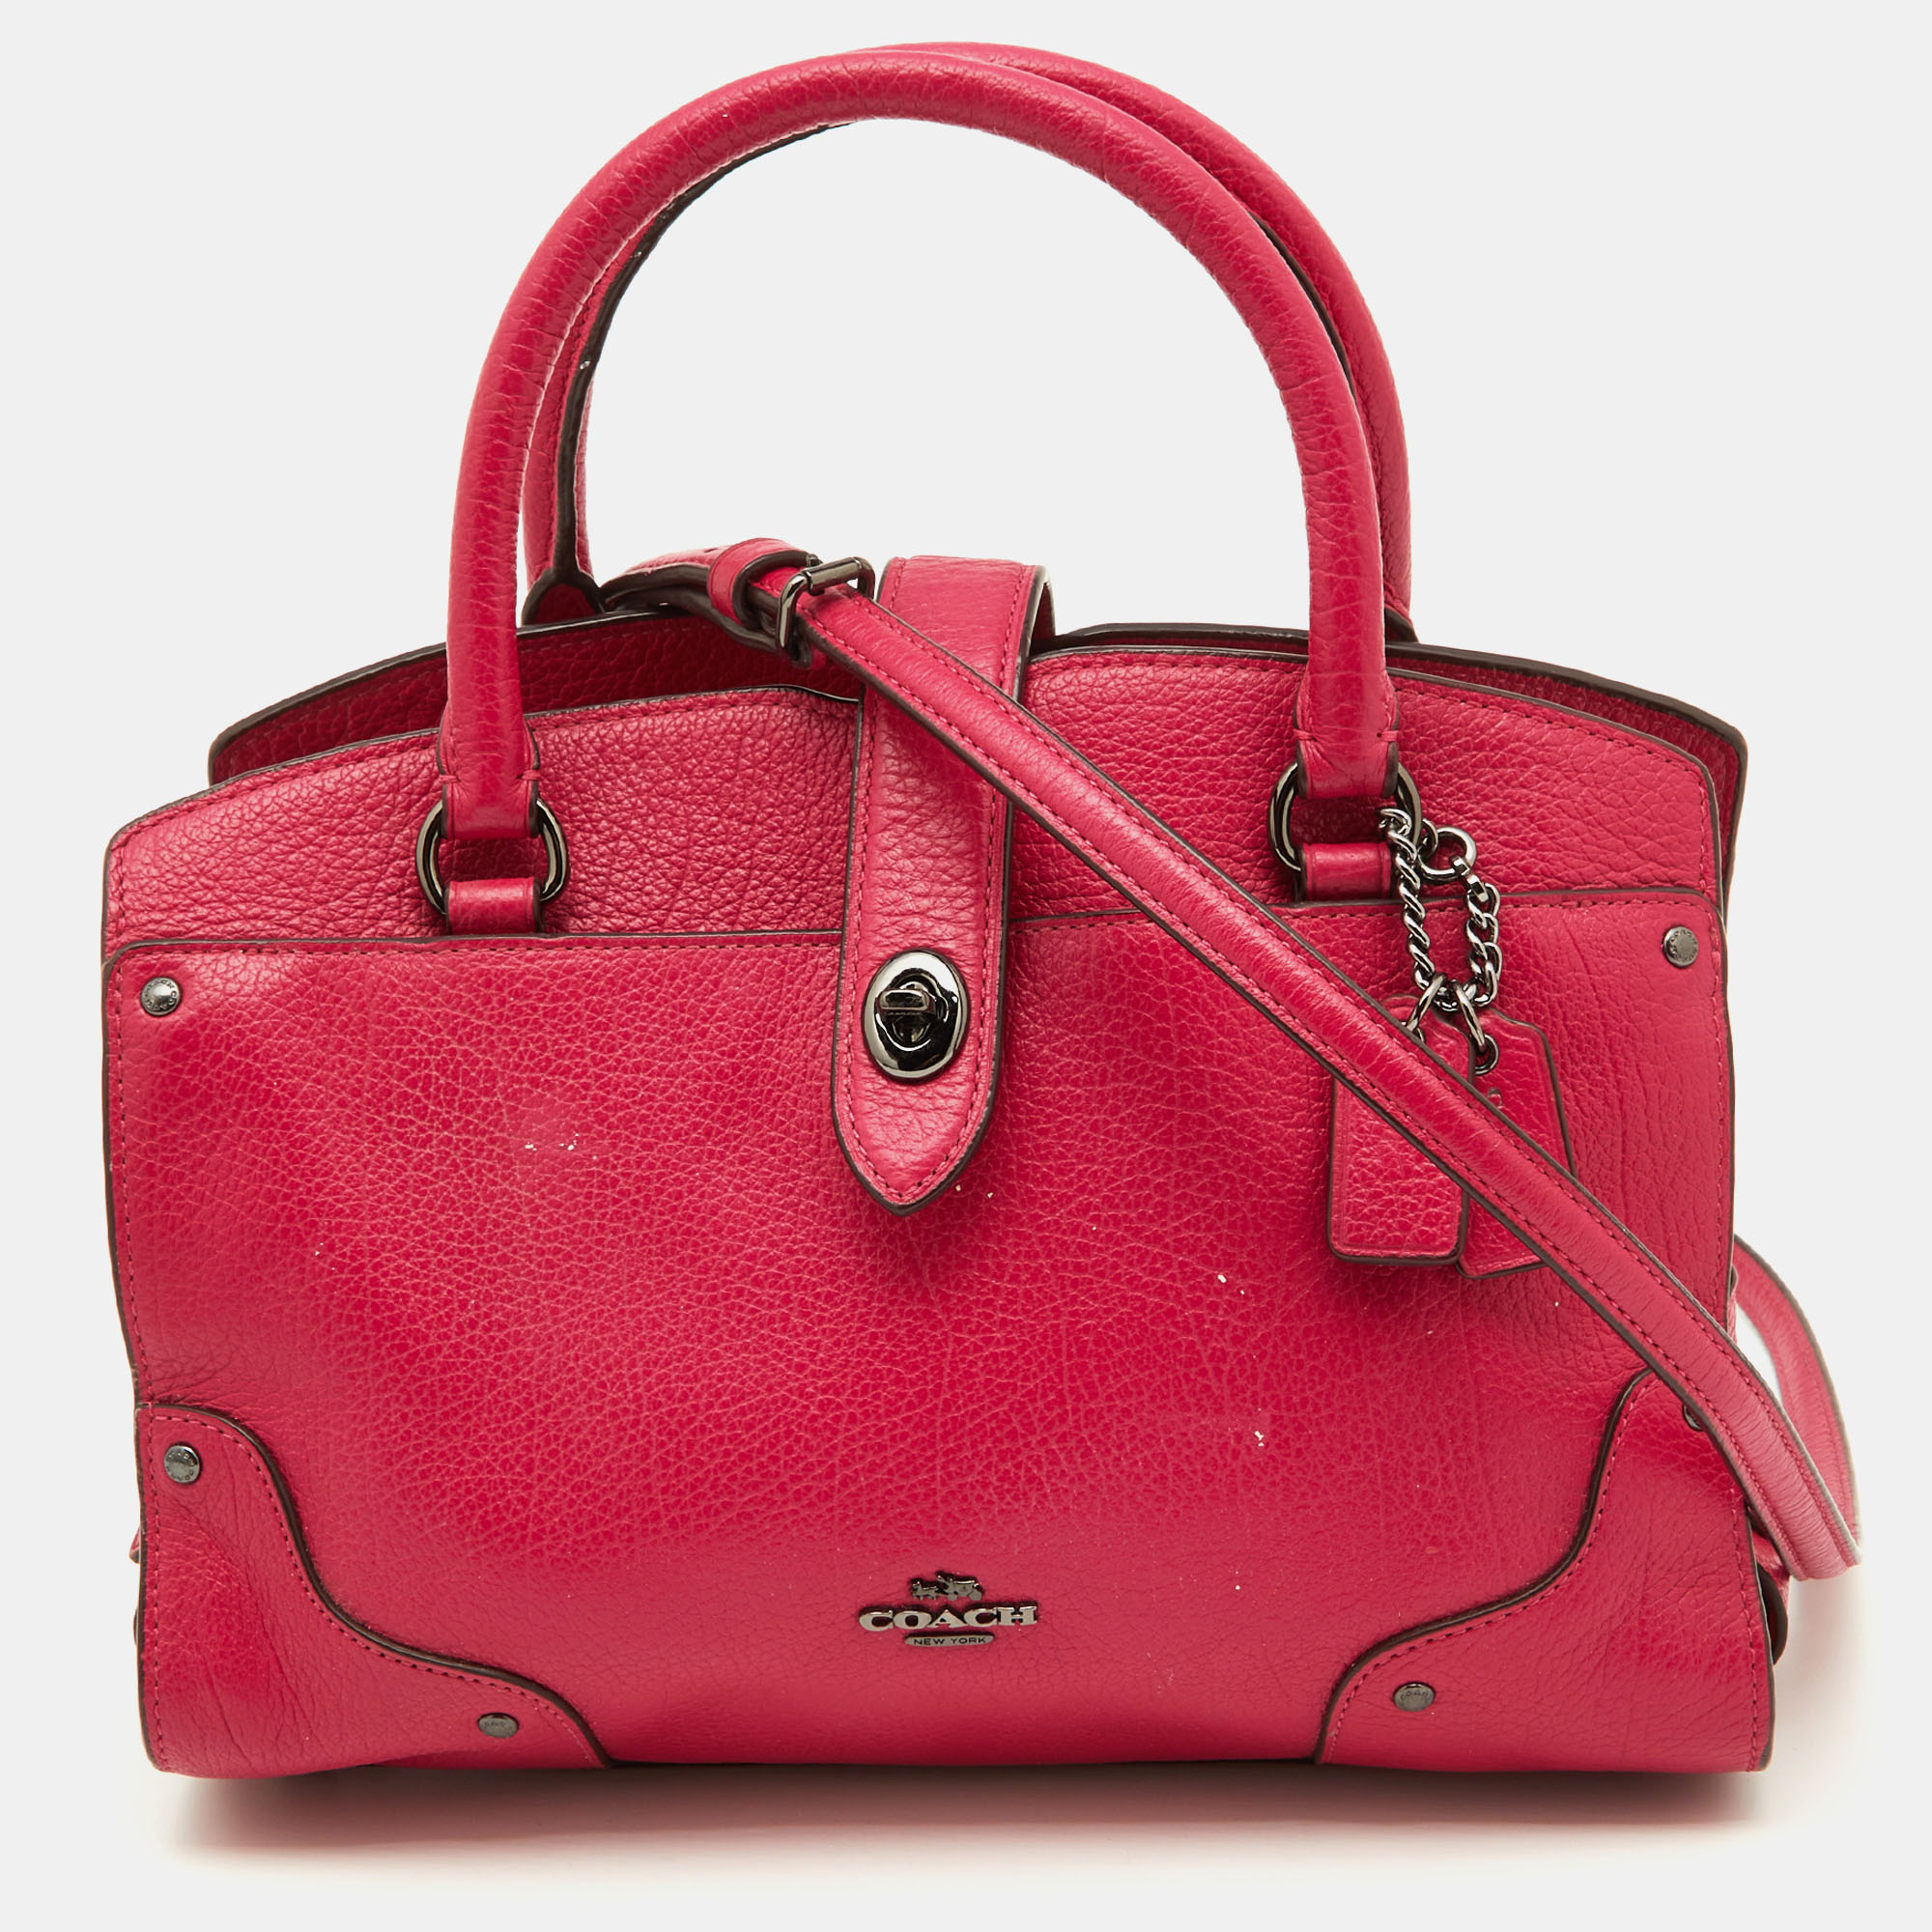 Coach pink leather mercer 24 satchel